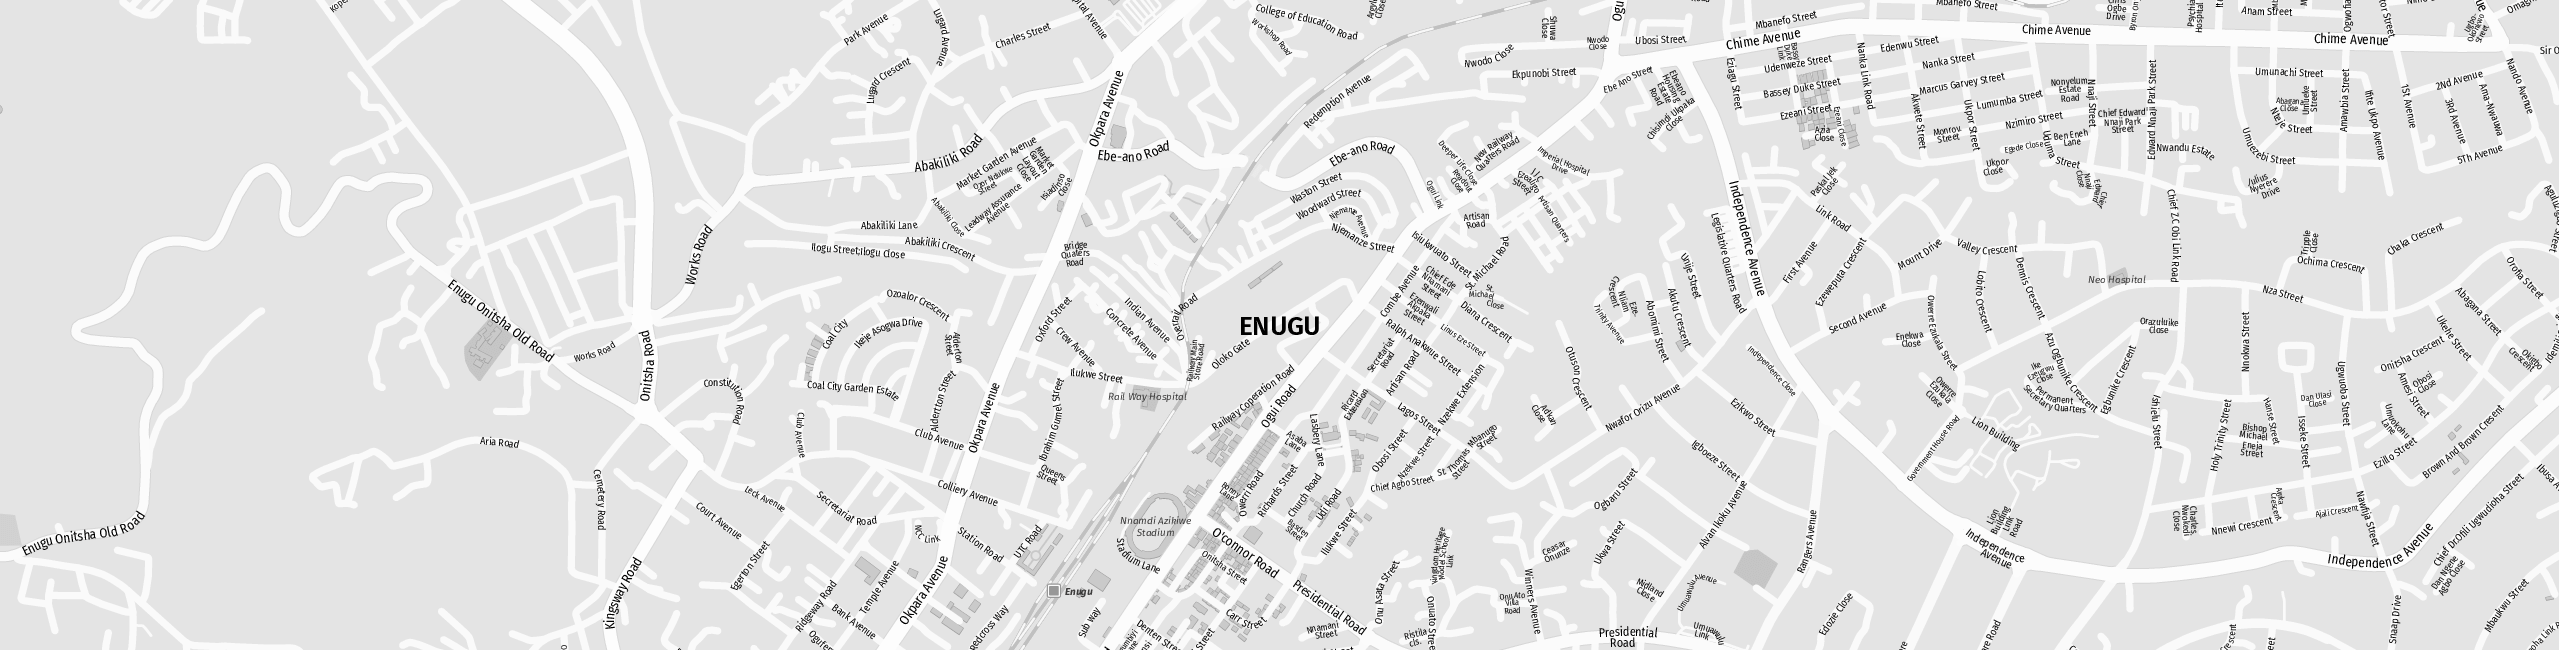 Stadtplan Enugu zum Downloaden.